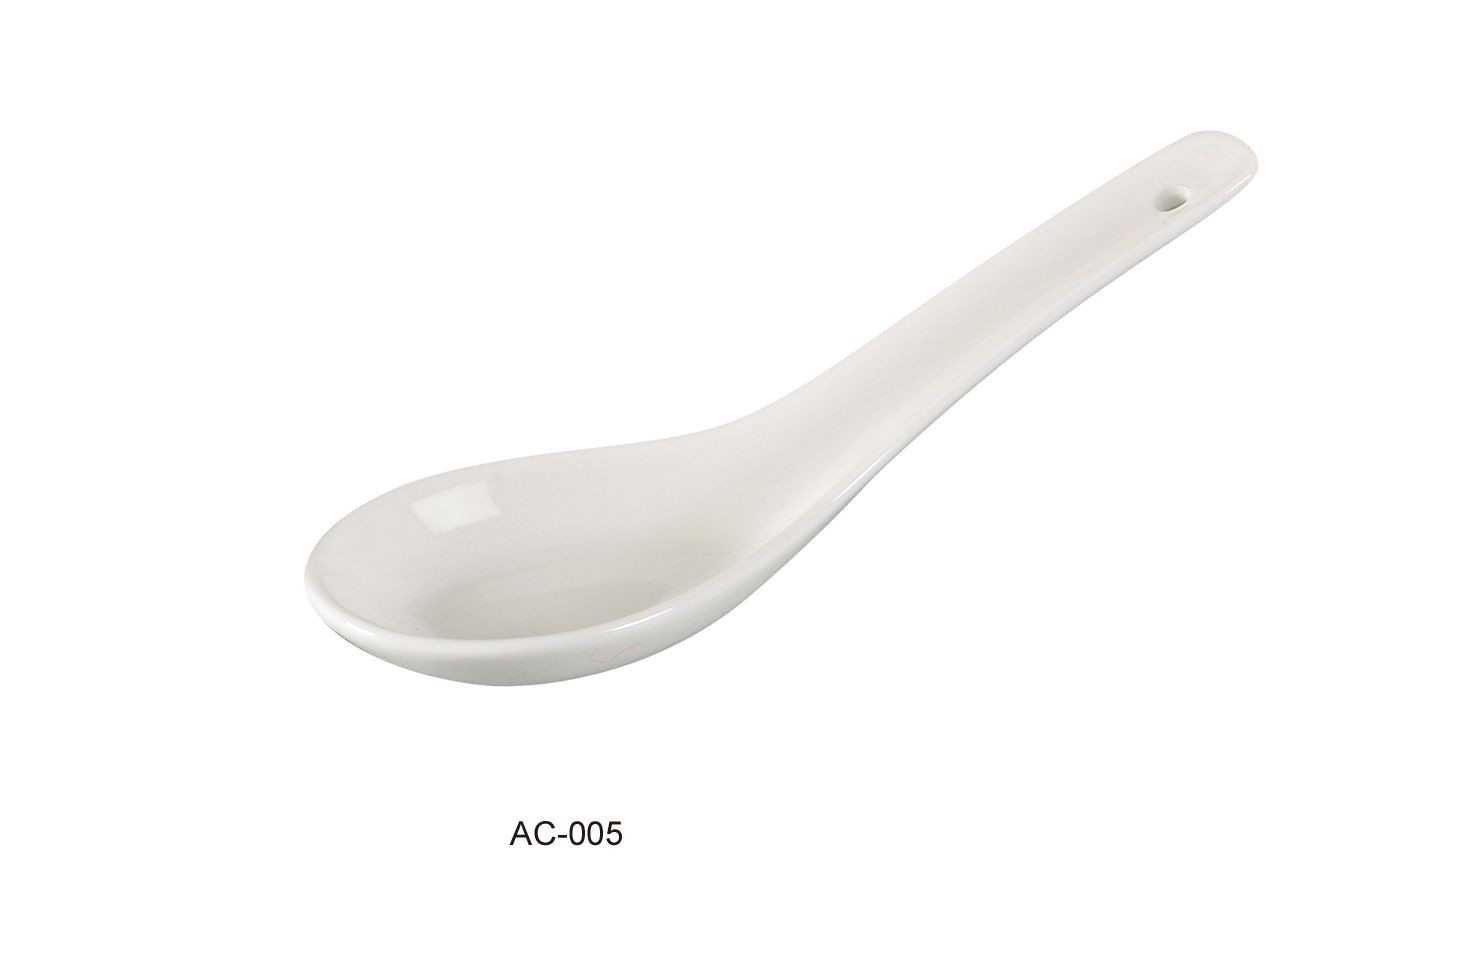 Yanco AC-005 Abco 5 1/2" Soup Spoon